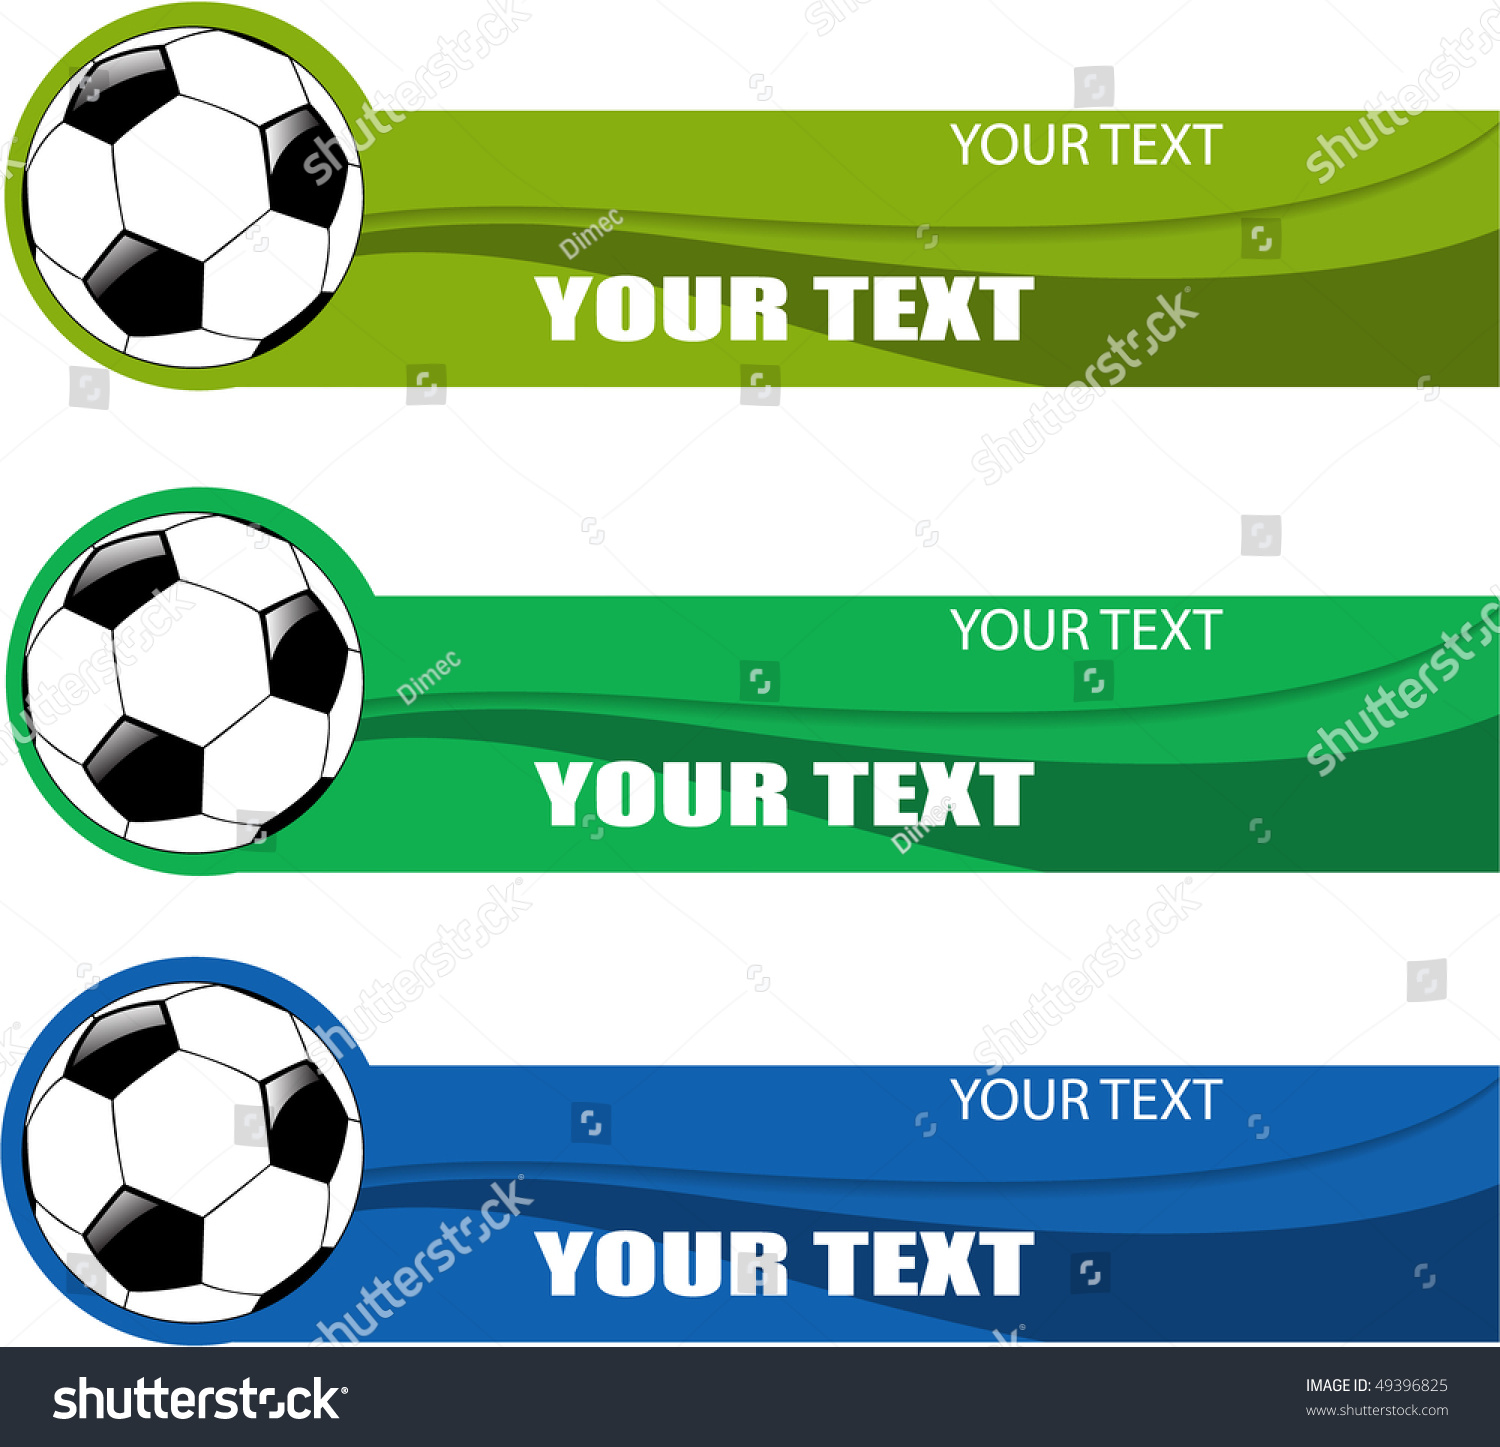 The Vector Color Soccer Banner Set - 49396825 : Shutterstock